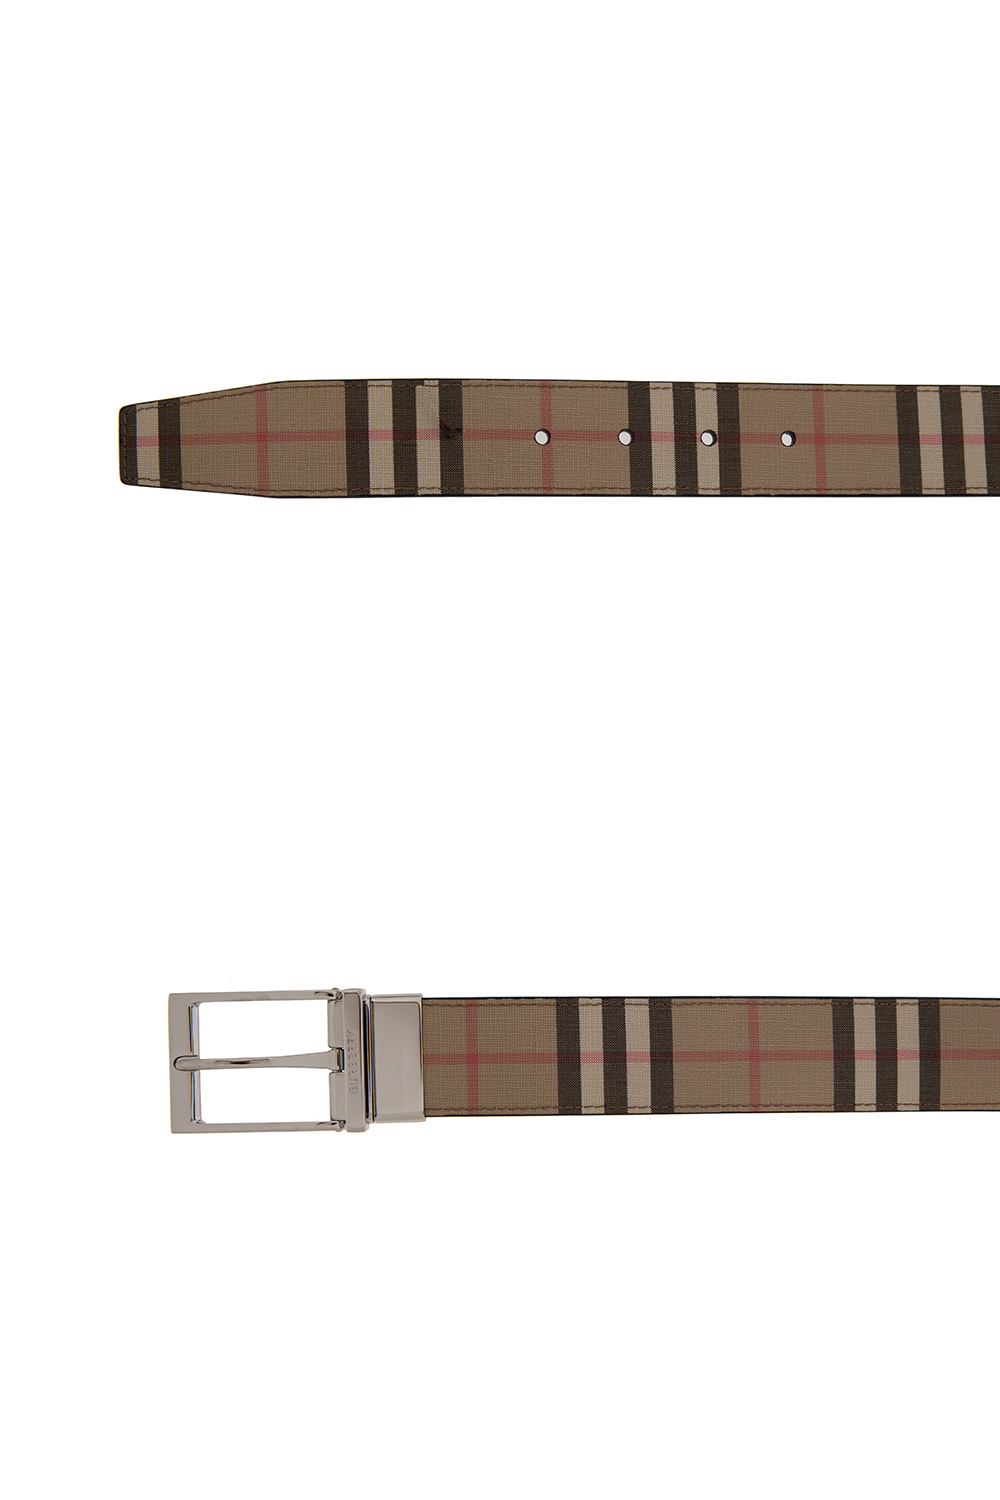 BURBERRY Burberry Tb Reversible Check Belt - Brown for Men